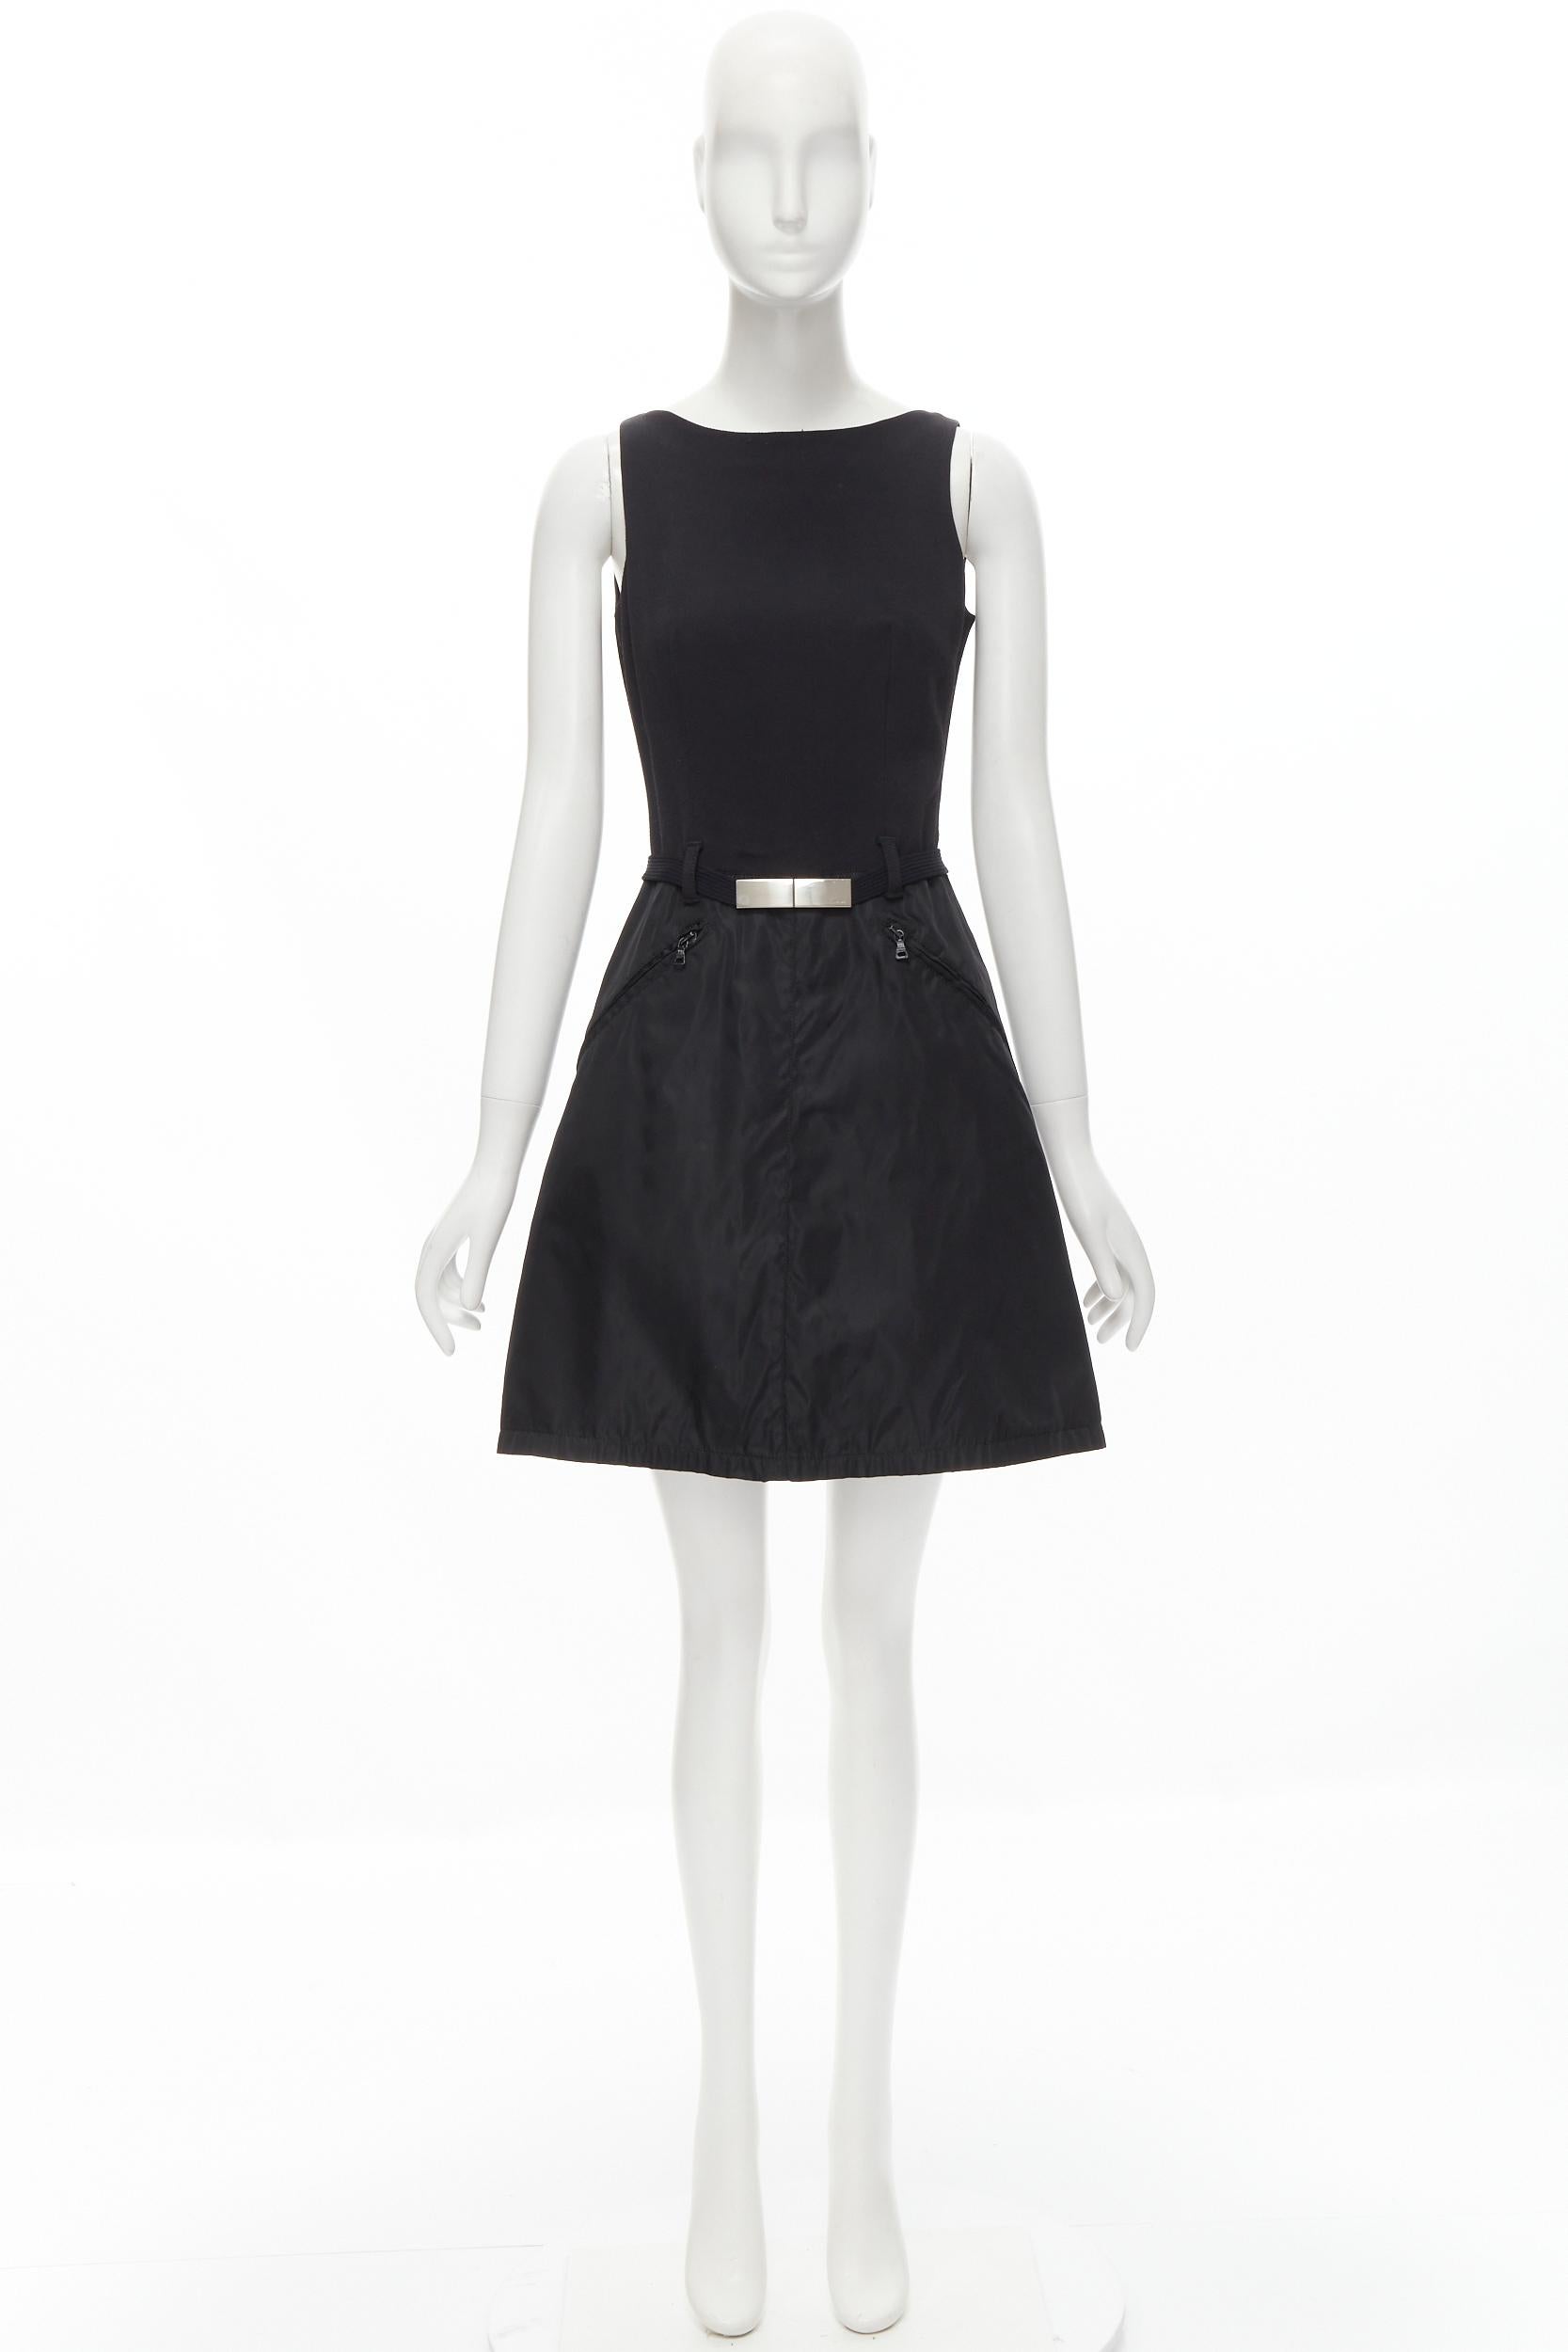 PRADA minimal black metal buckle belted nylon A-line skirt dress S 1